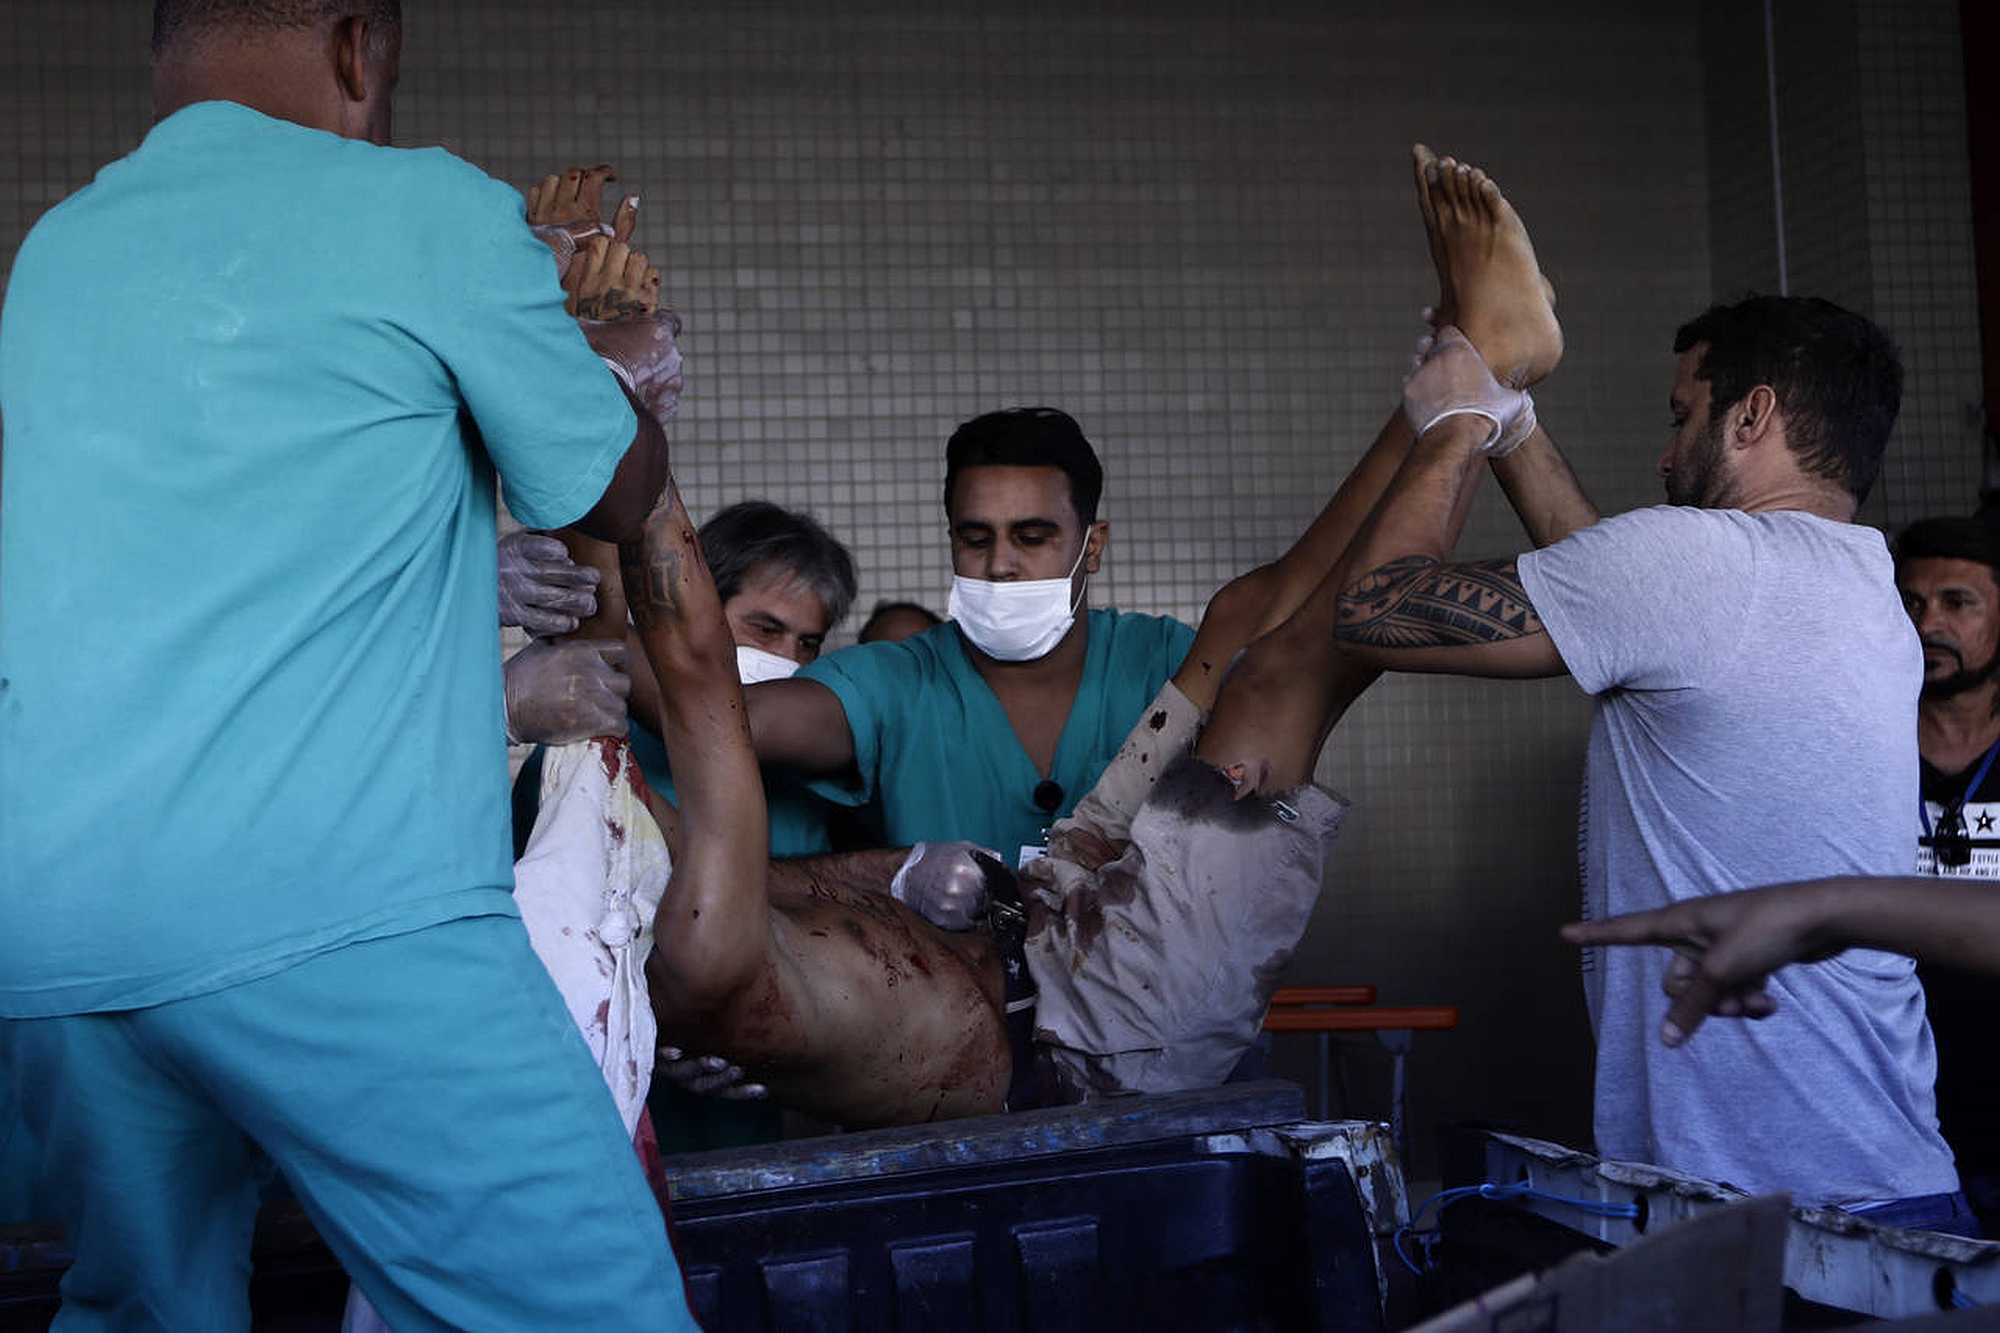 Health workers gather around an injured man in Rio